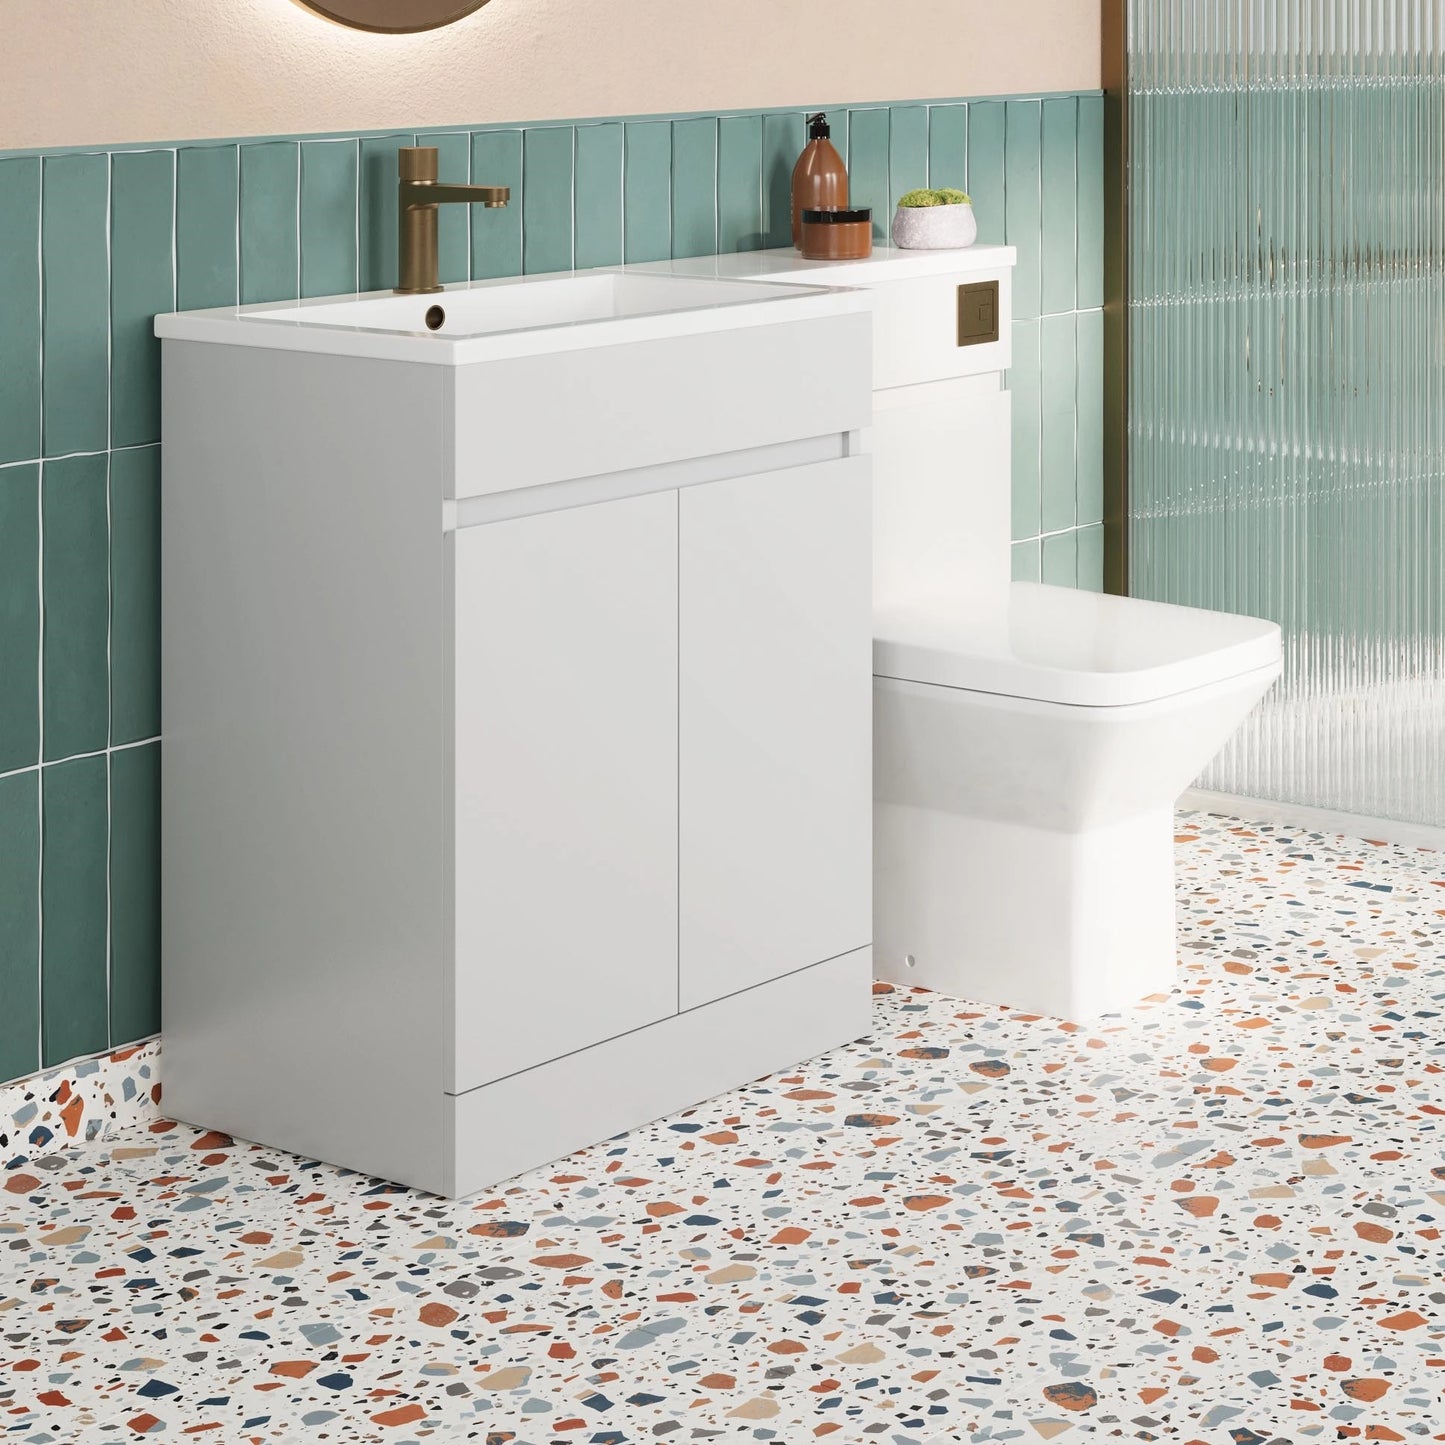 Waterguard Floor Standing Gloss White Basin Sink Vanity Unit